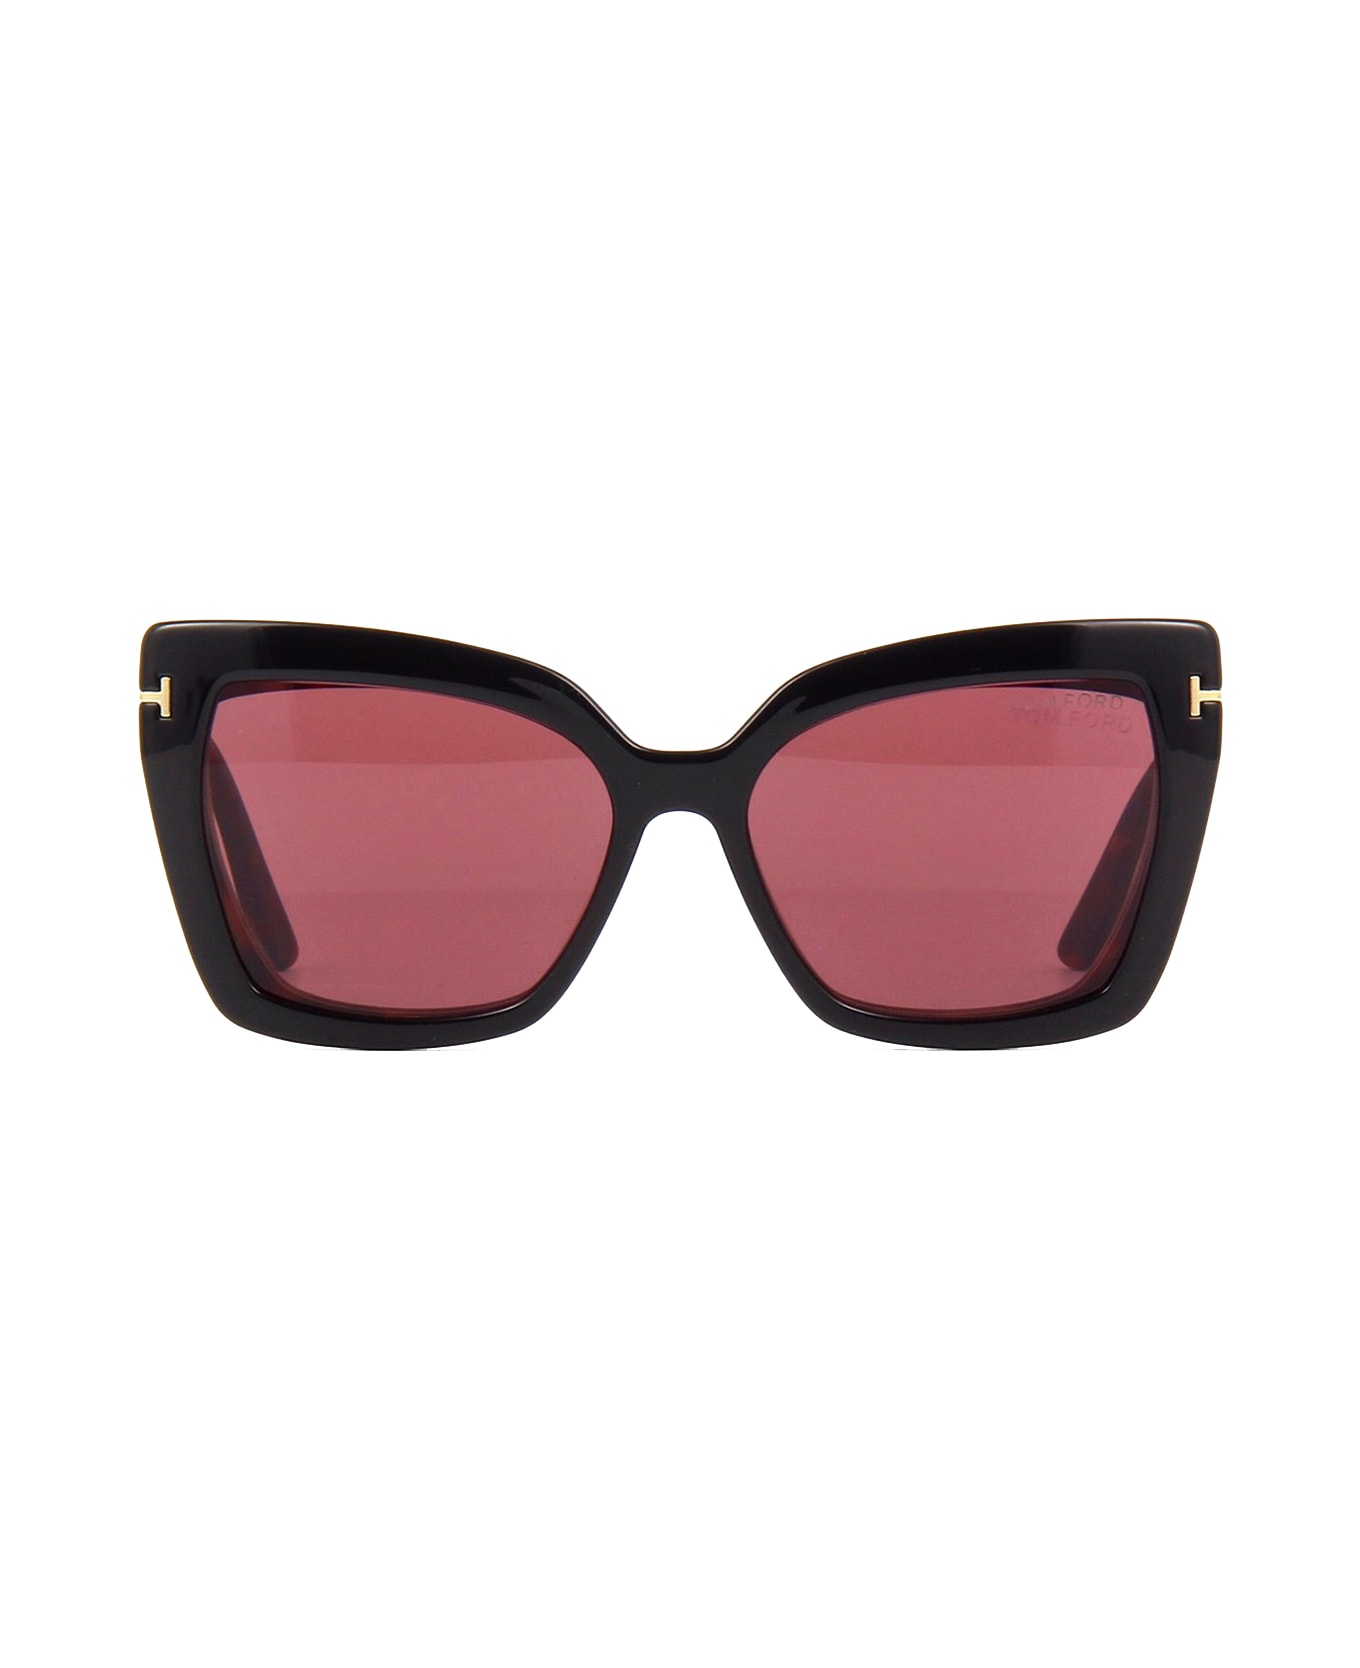 Tom Ford Eyewear Ft5641-b Red Havana Glasses - Red Havana